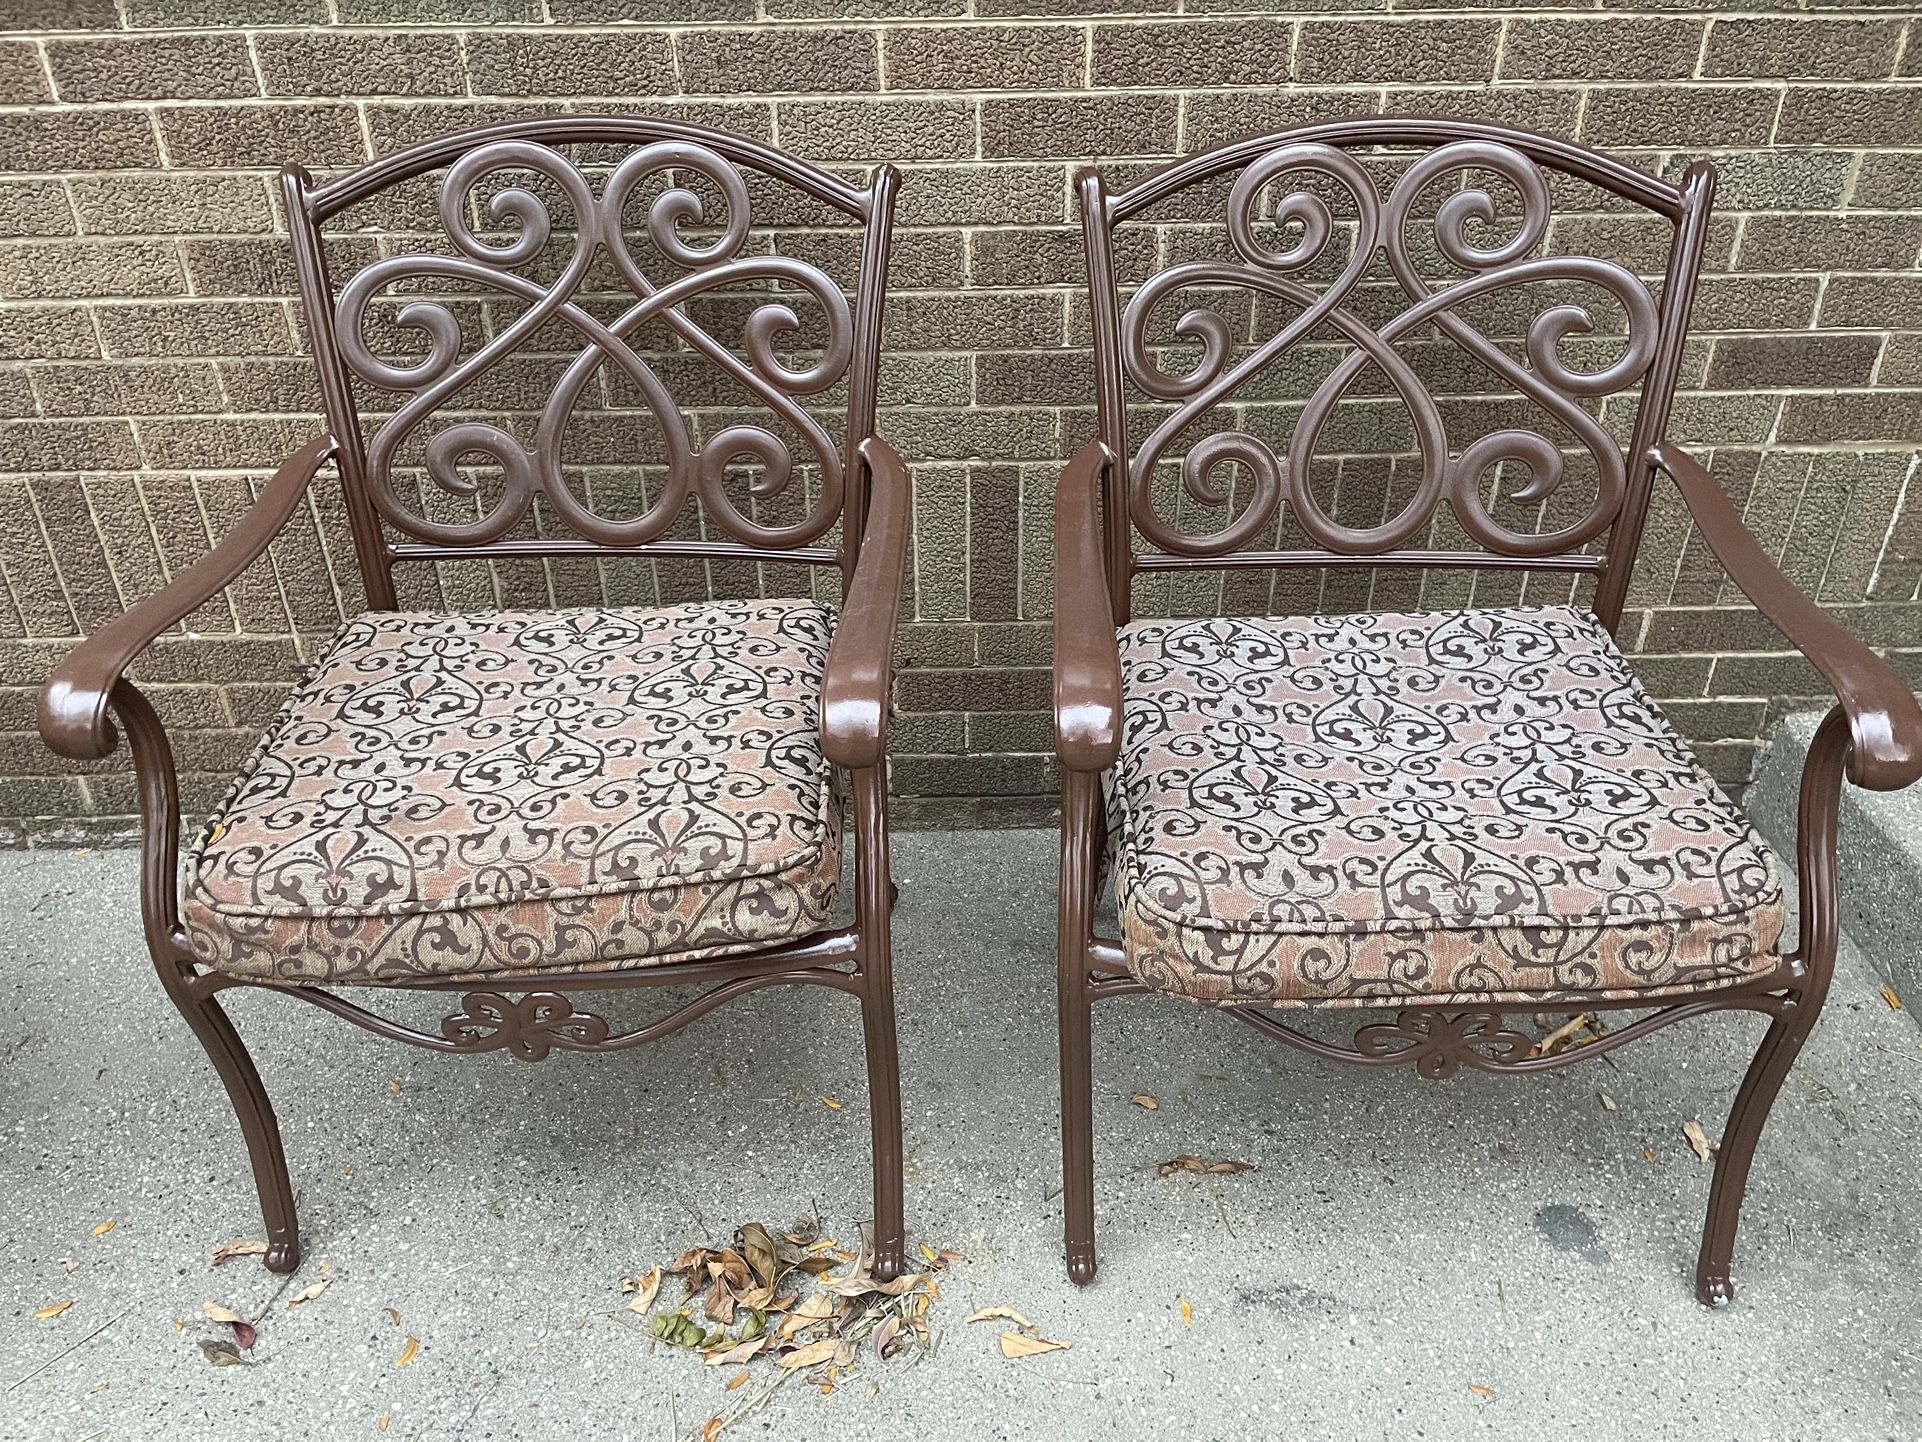 2 Strong Patio Deck Chairs, Hampton Bay Outdoor Cushions